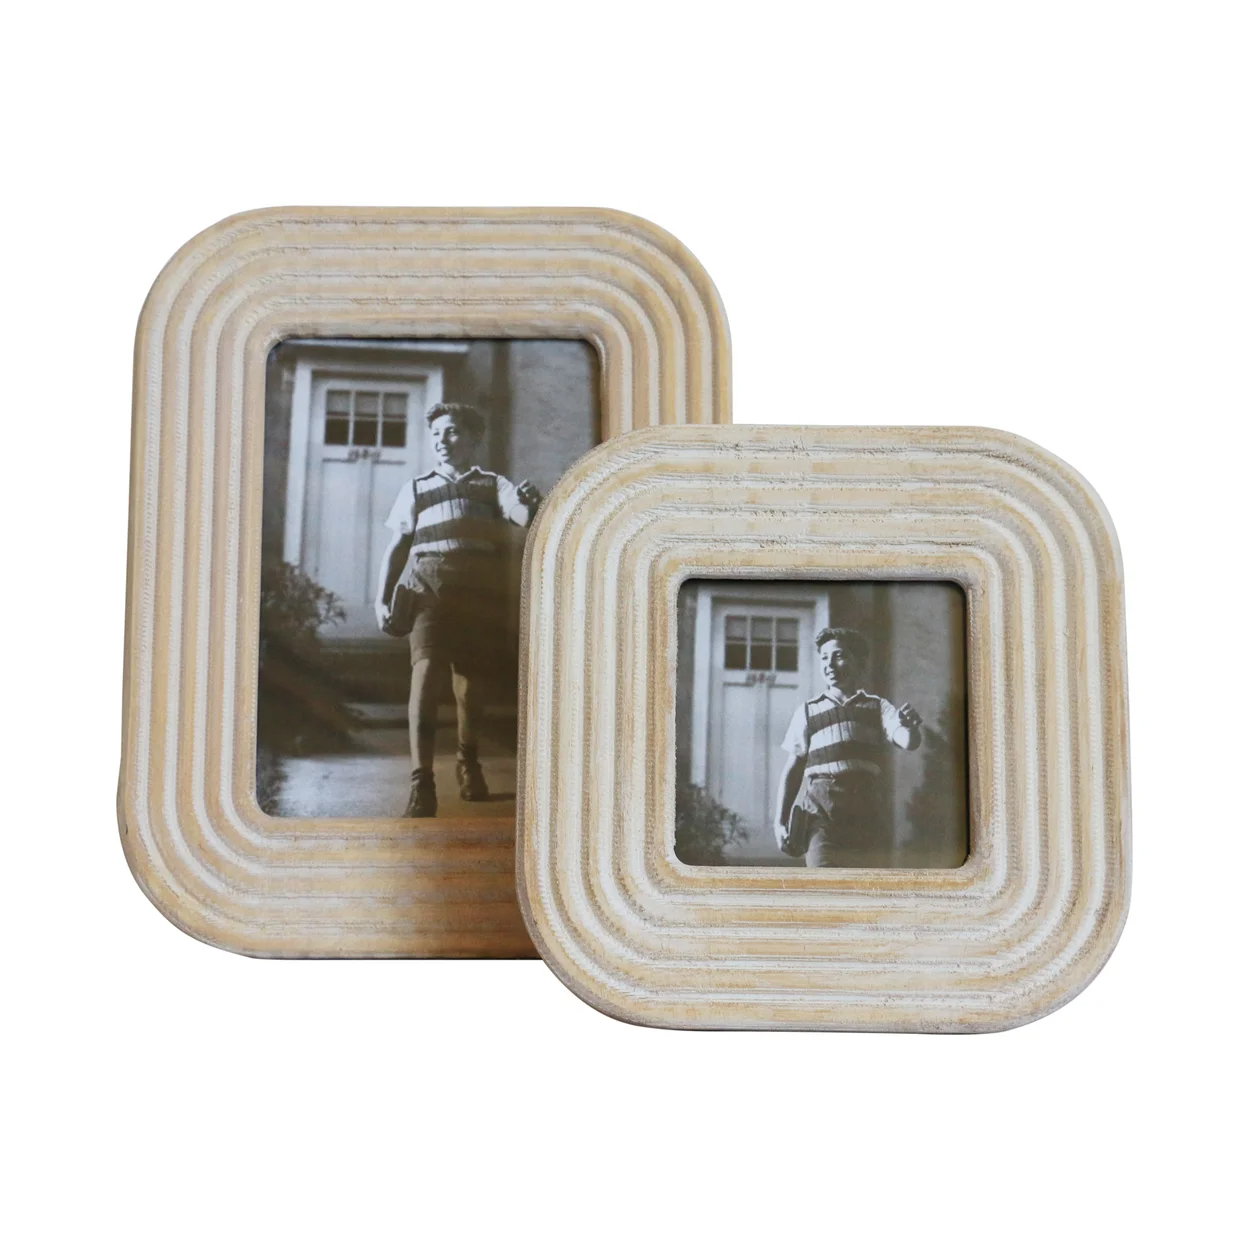 Wooden Photo Frame with Ridged Detail - 4x4" | CC Interiors | Avisons